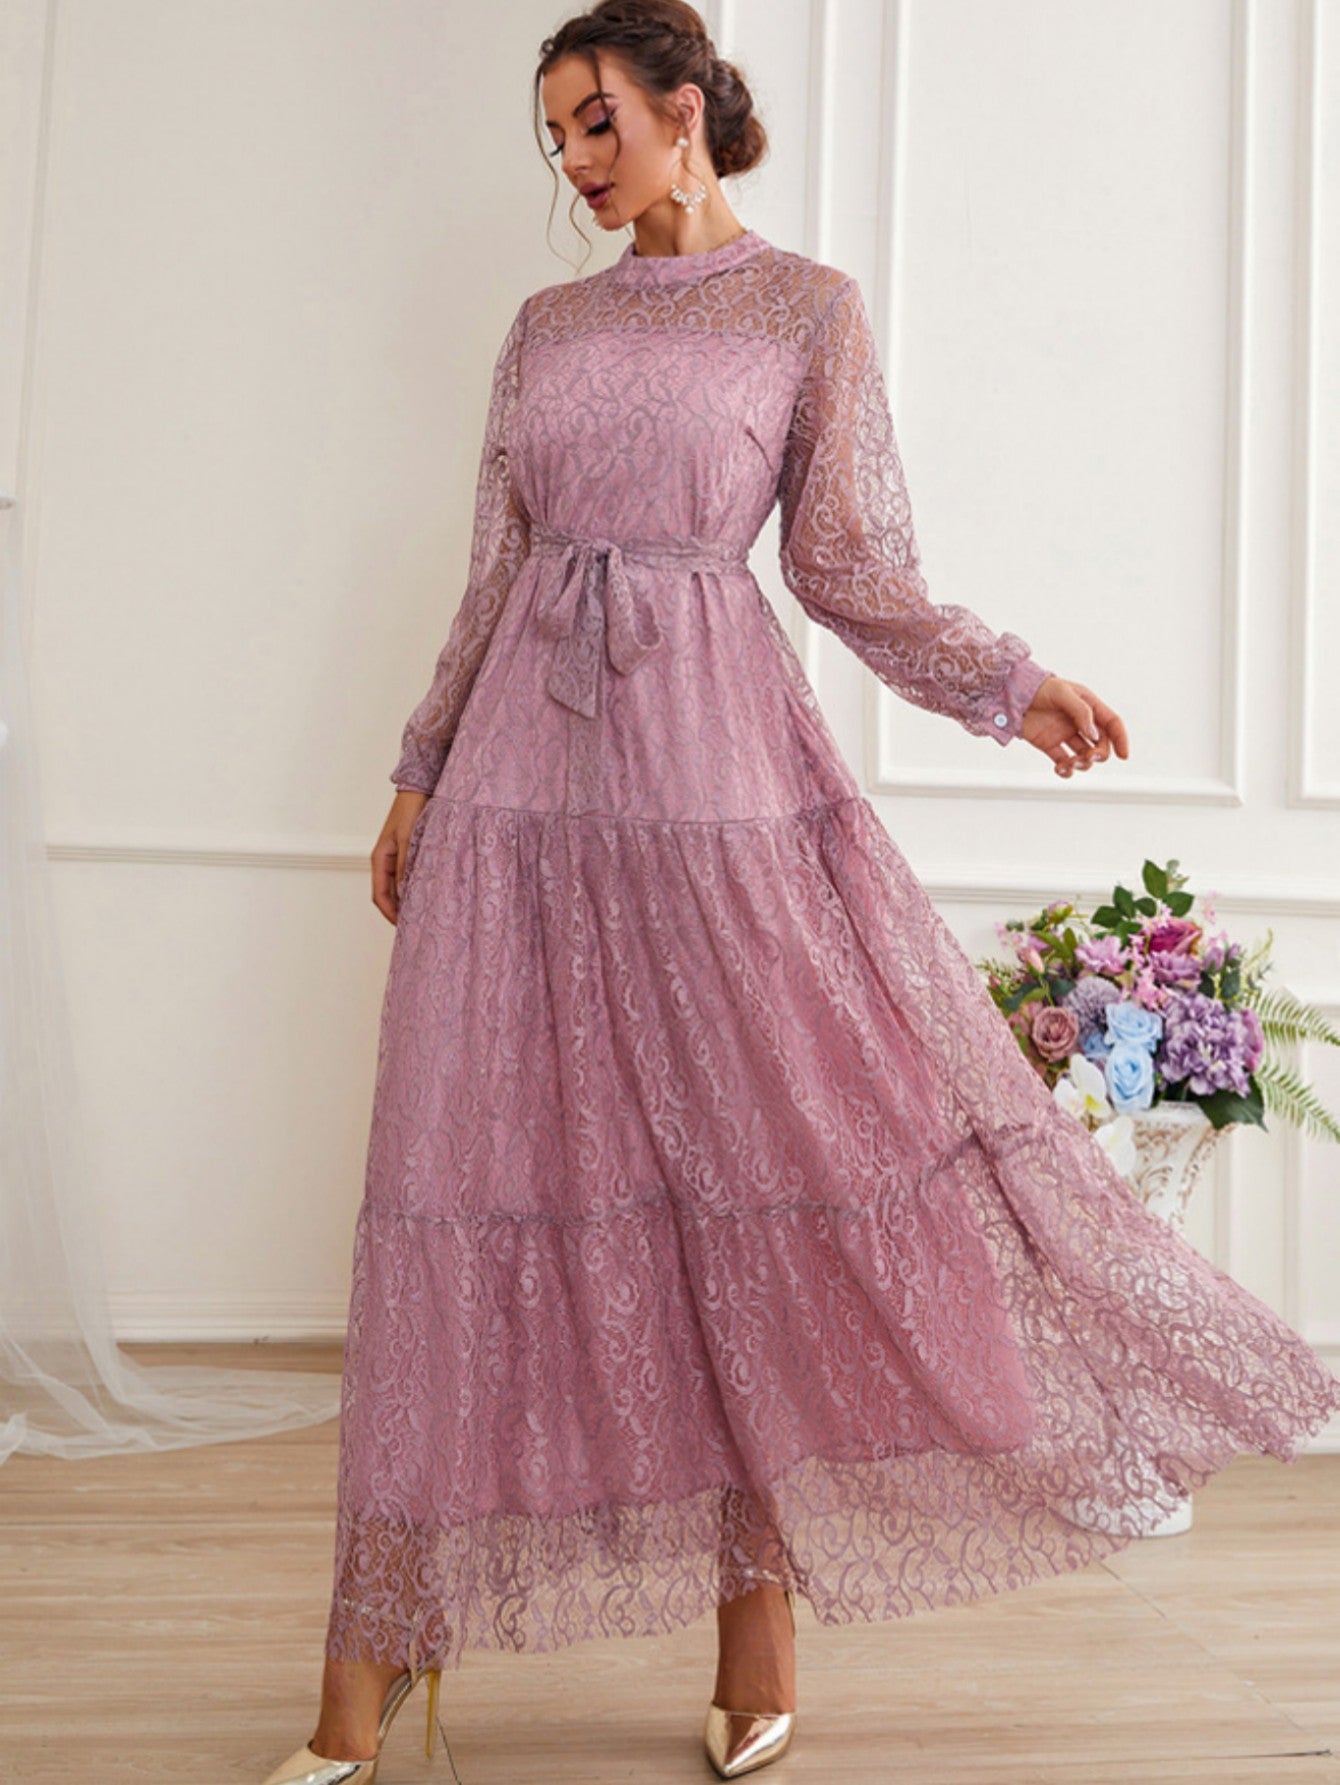 Elegant Purple Long Sleeves Evening Dress